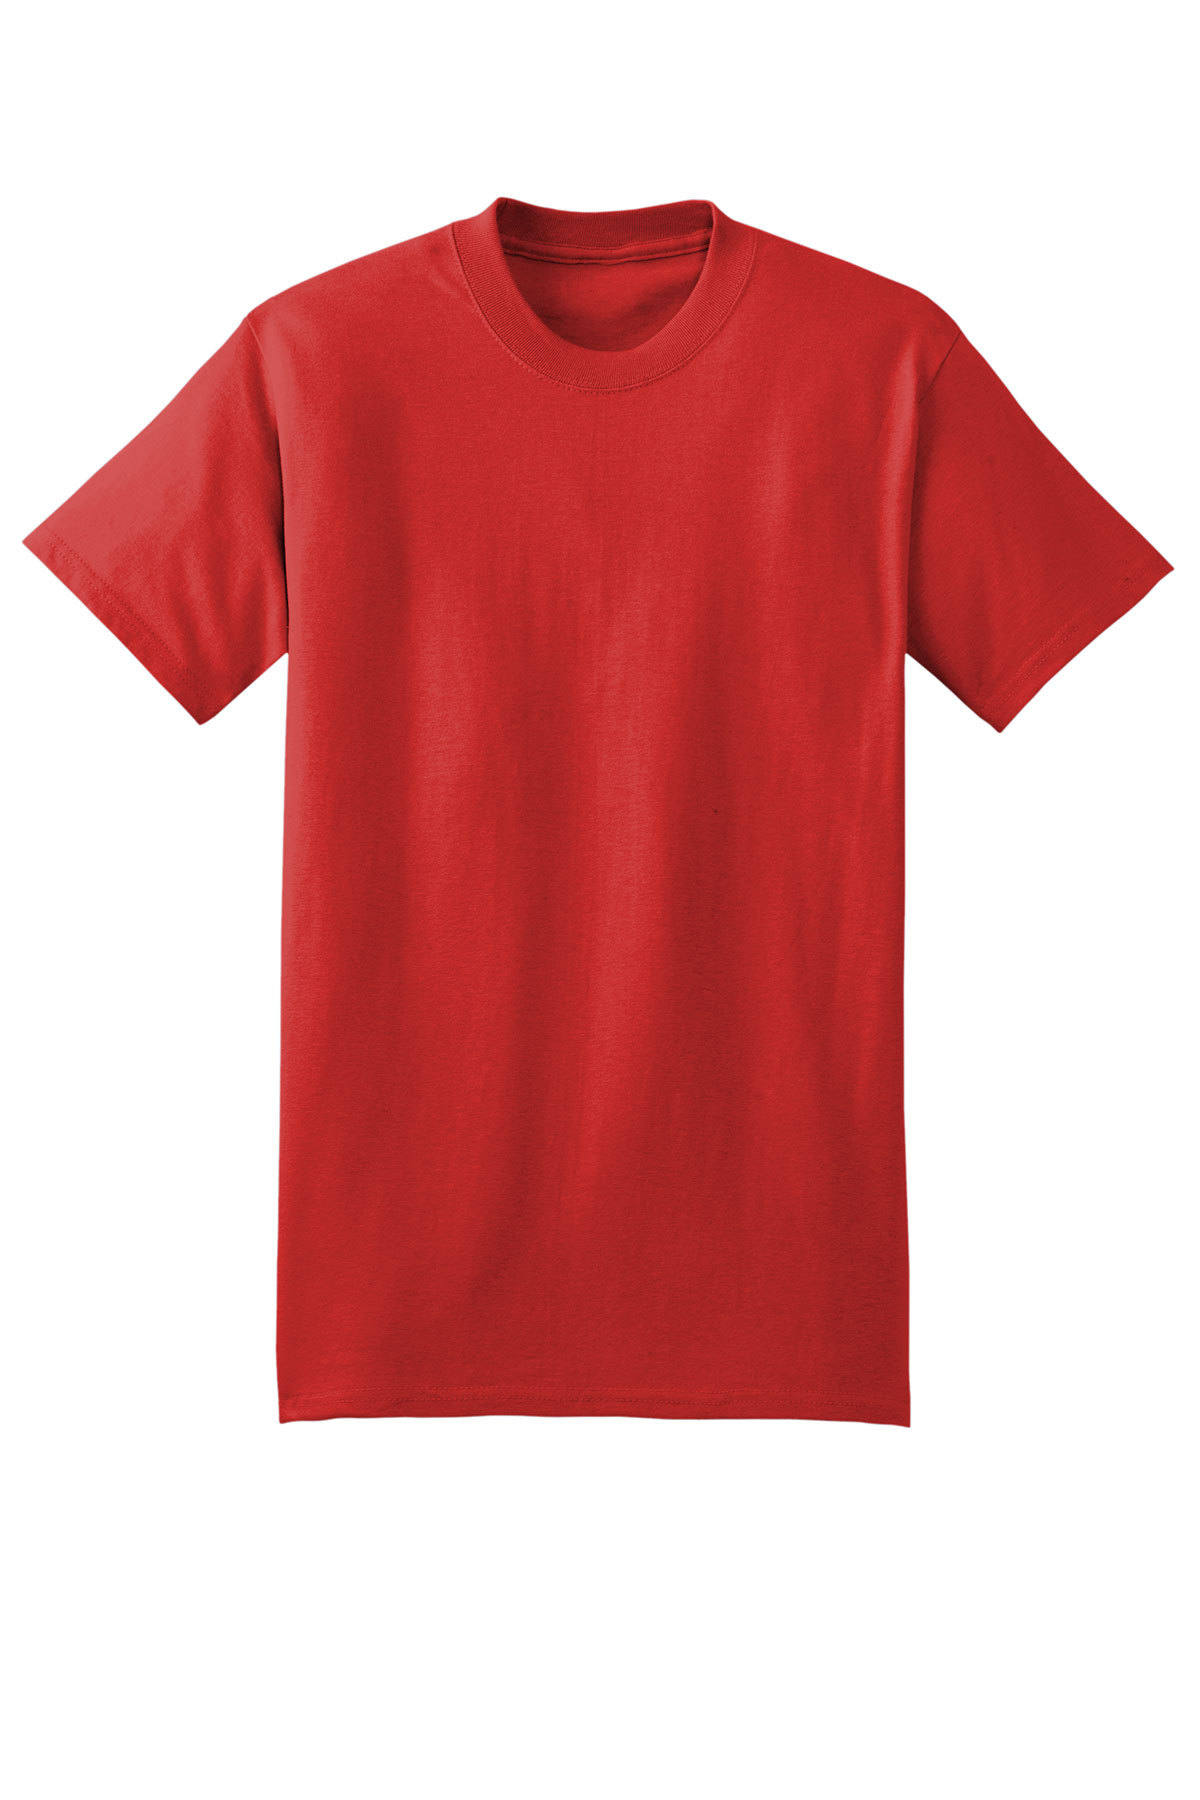 Hanes Beefy-T - 100% Cotton T-Shirt | Product | SanMar